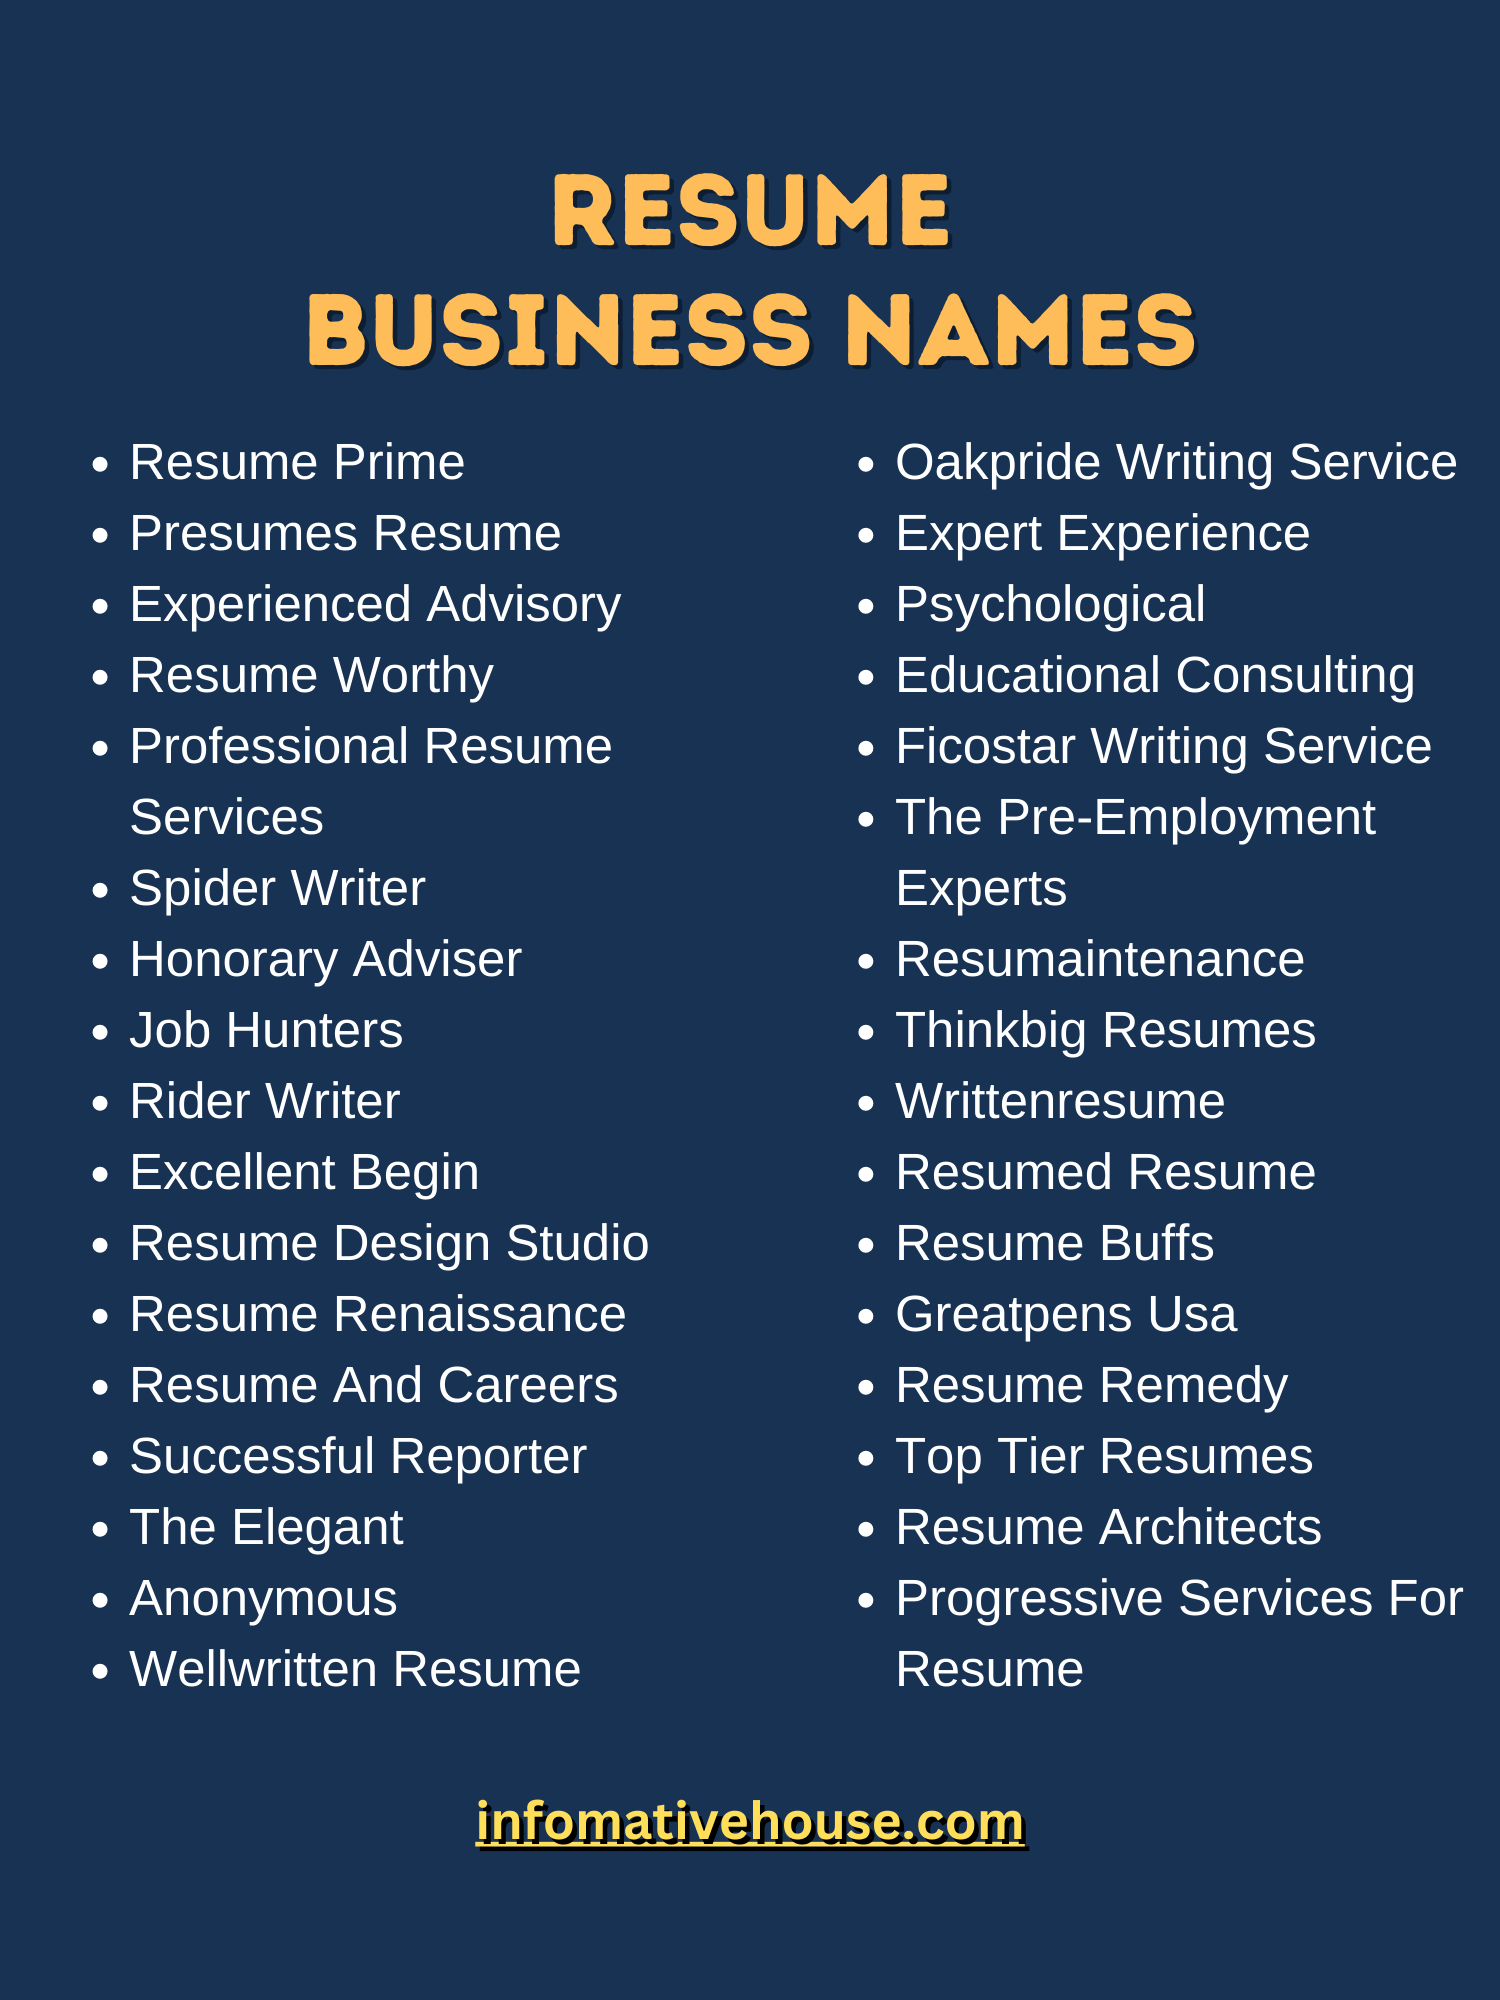 resume writer business names